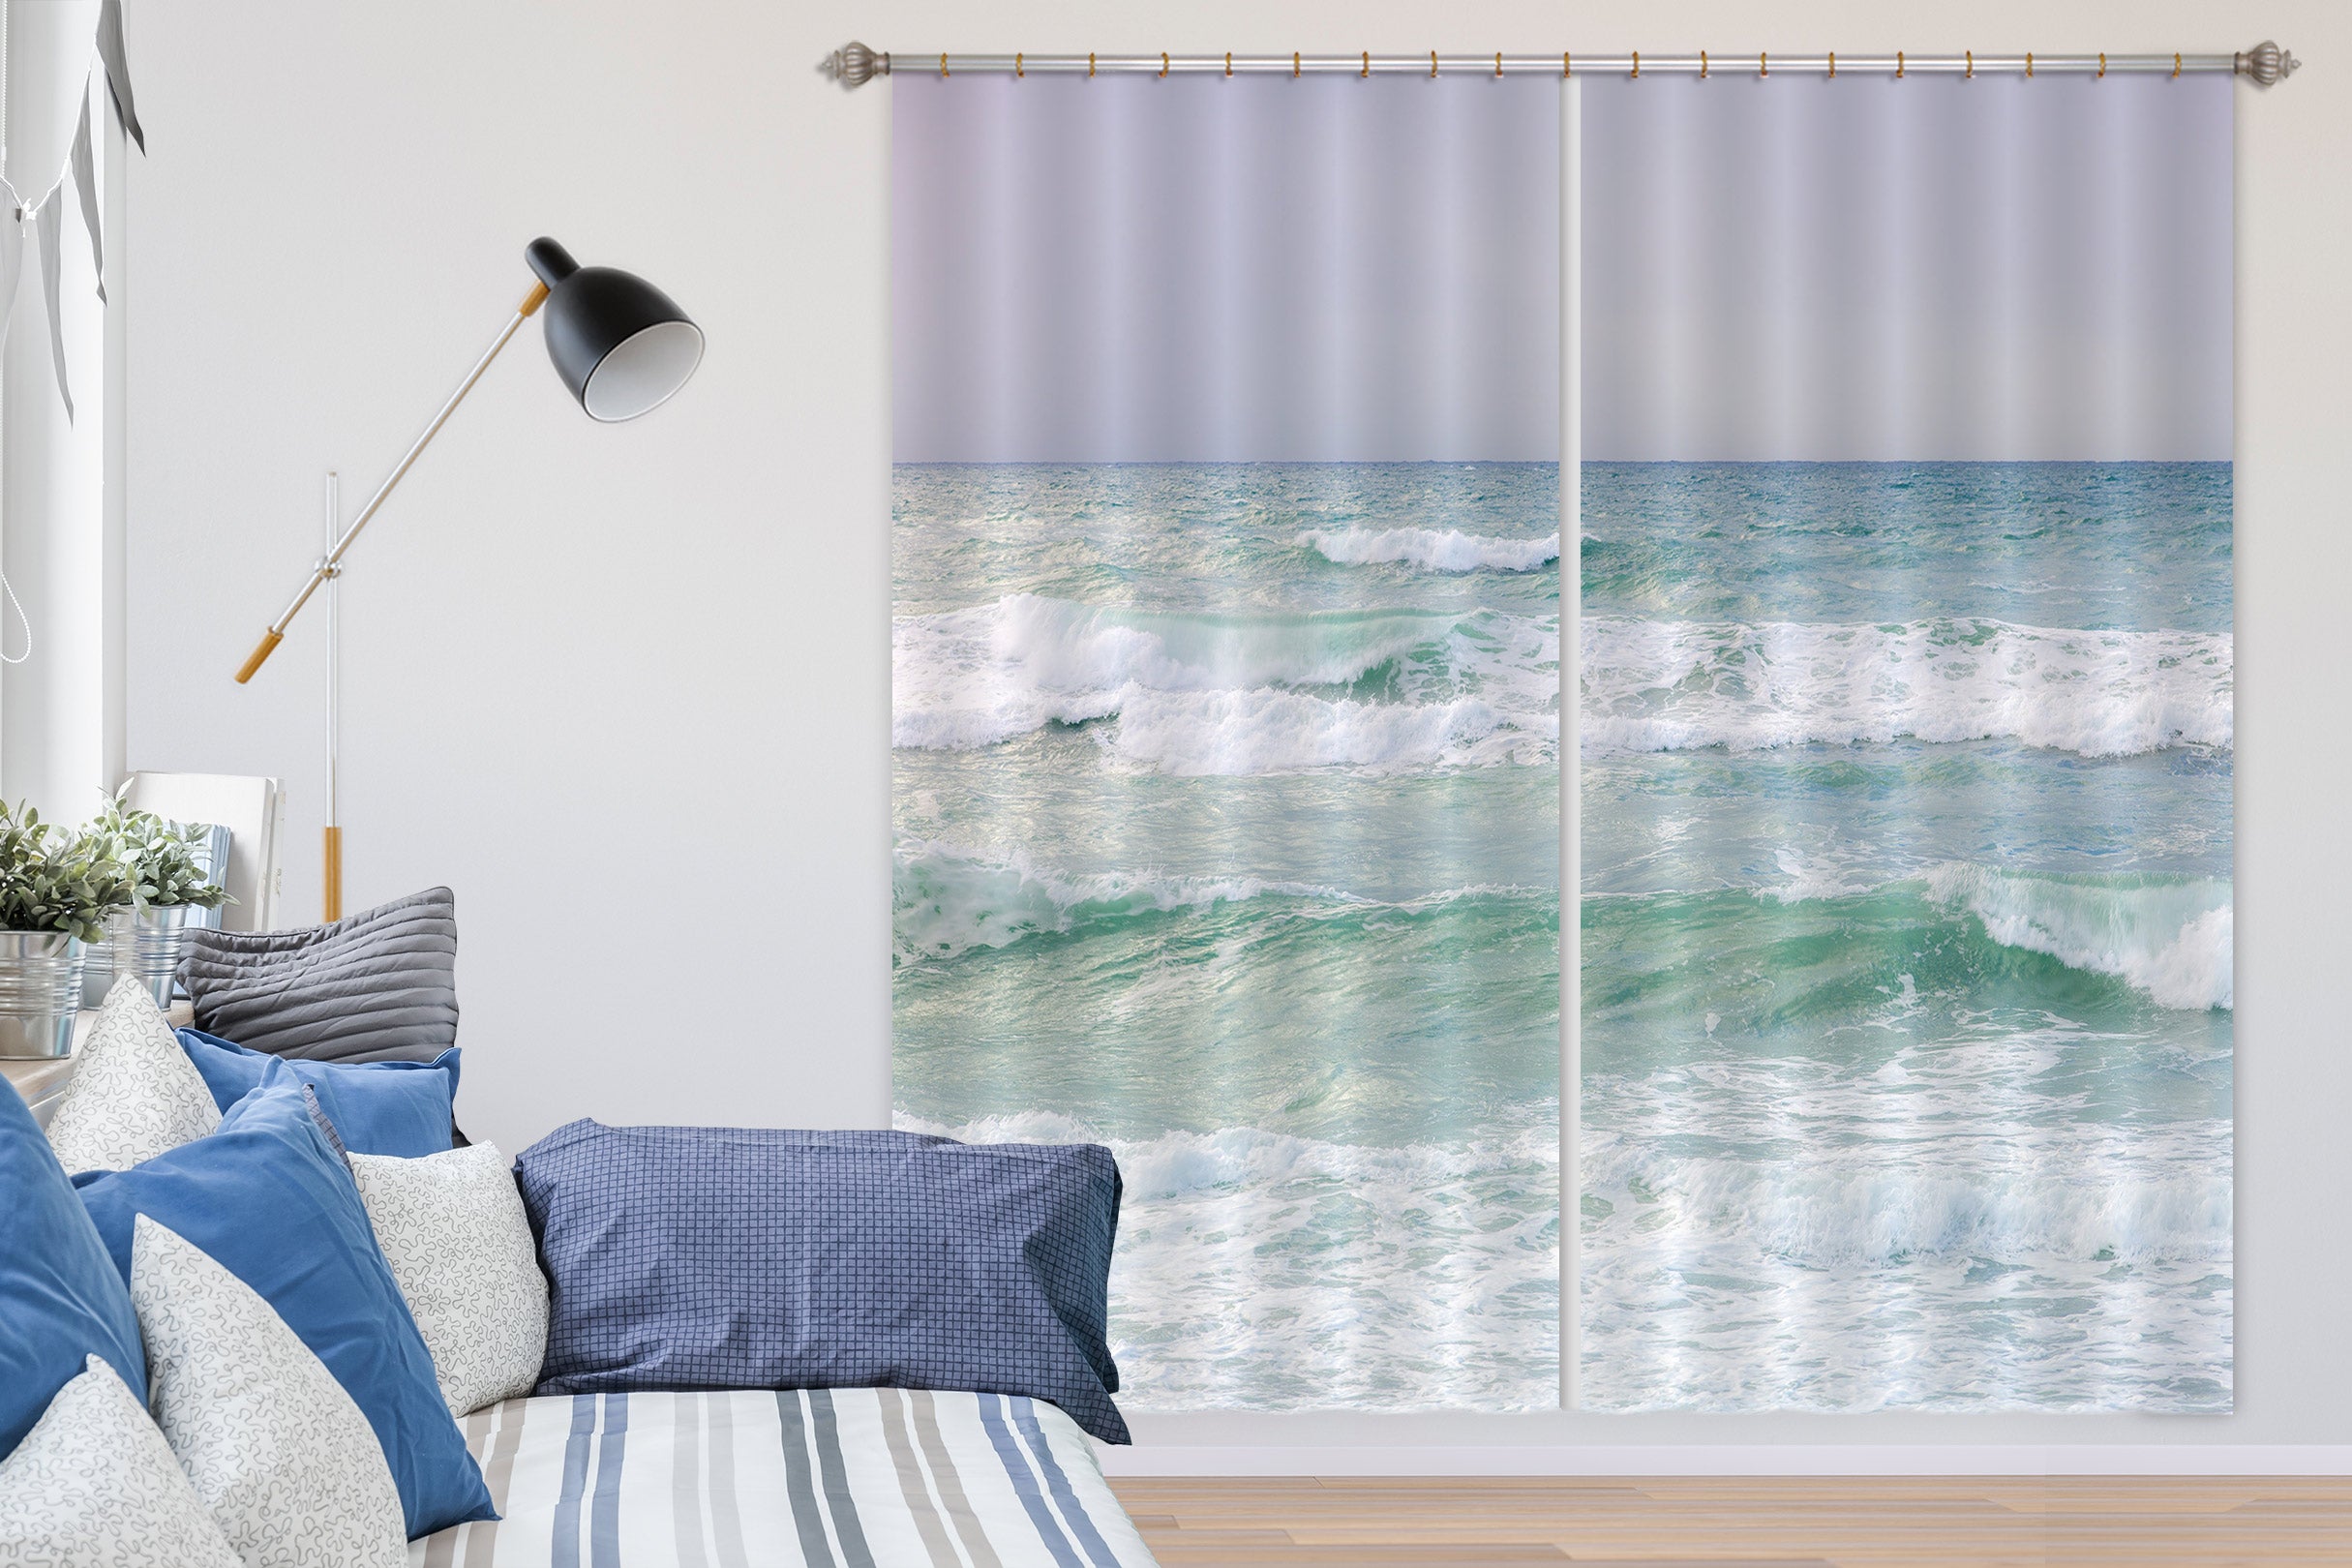 3D Ocean Waves 6526 Assaf Frank Curtain Curtains Drapes